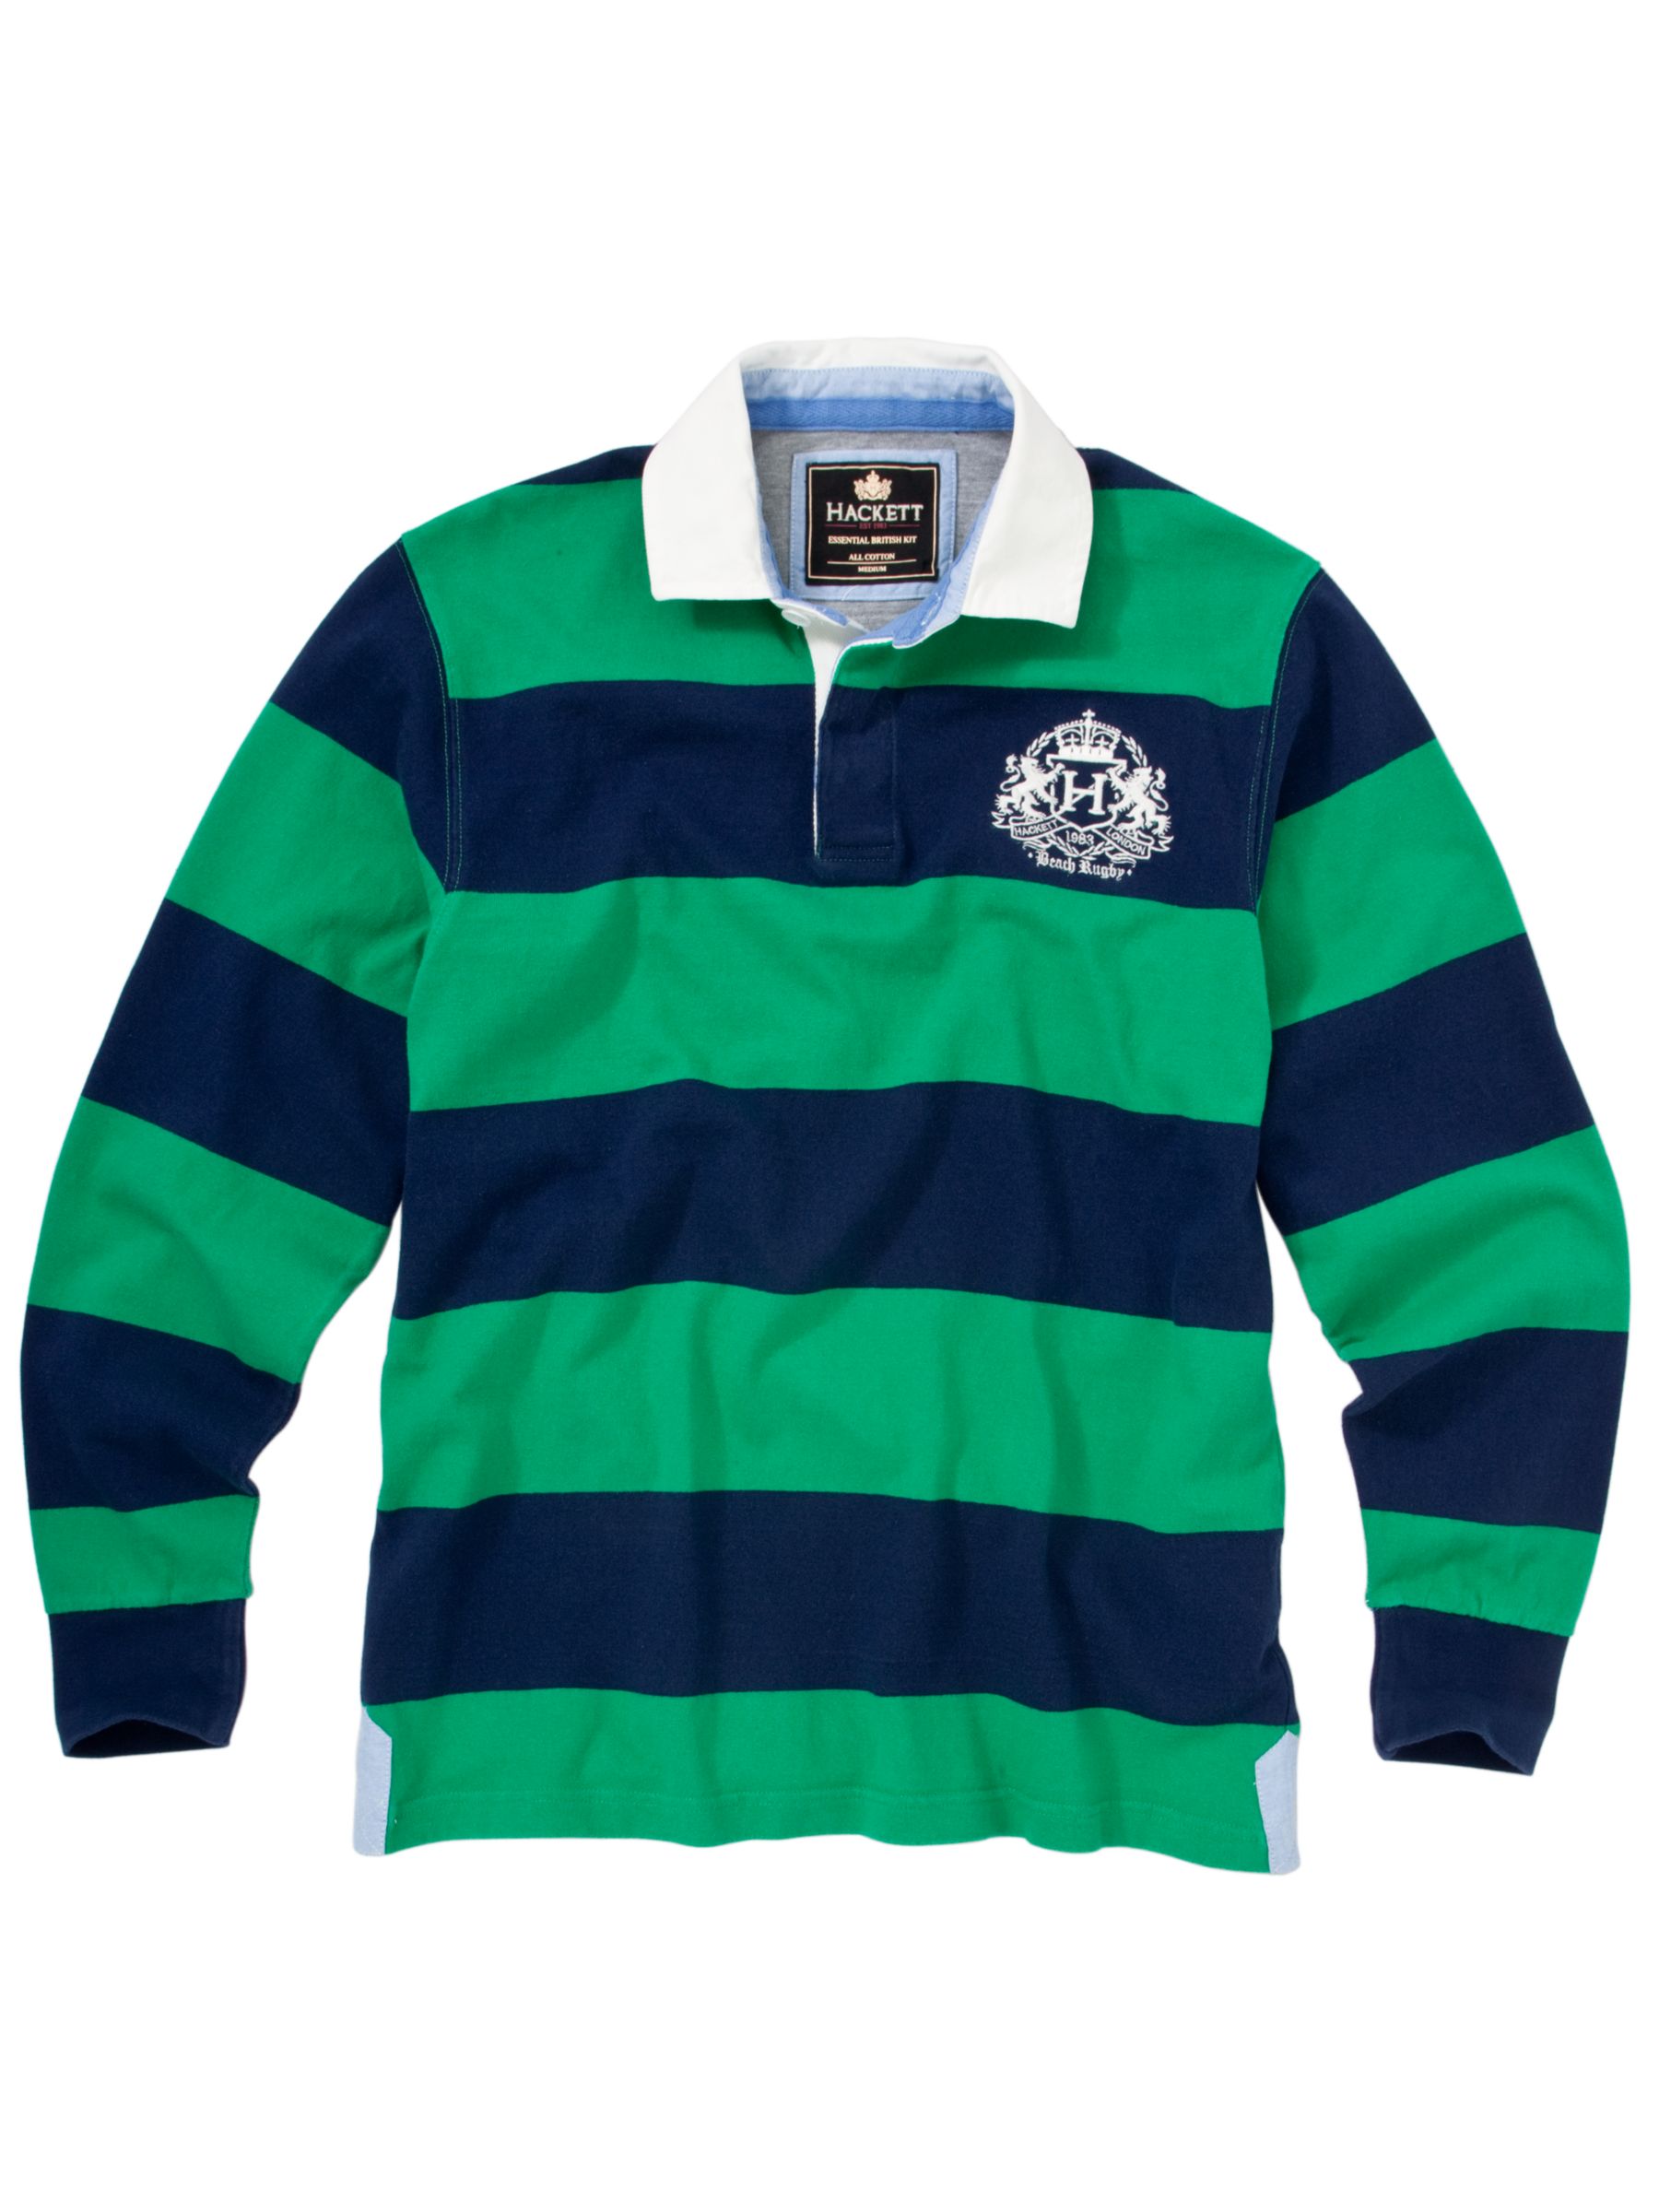 Oxford Trim Rugby Shirt, Navy/Green